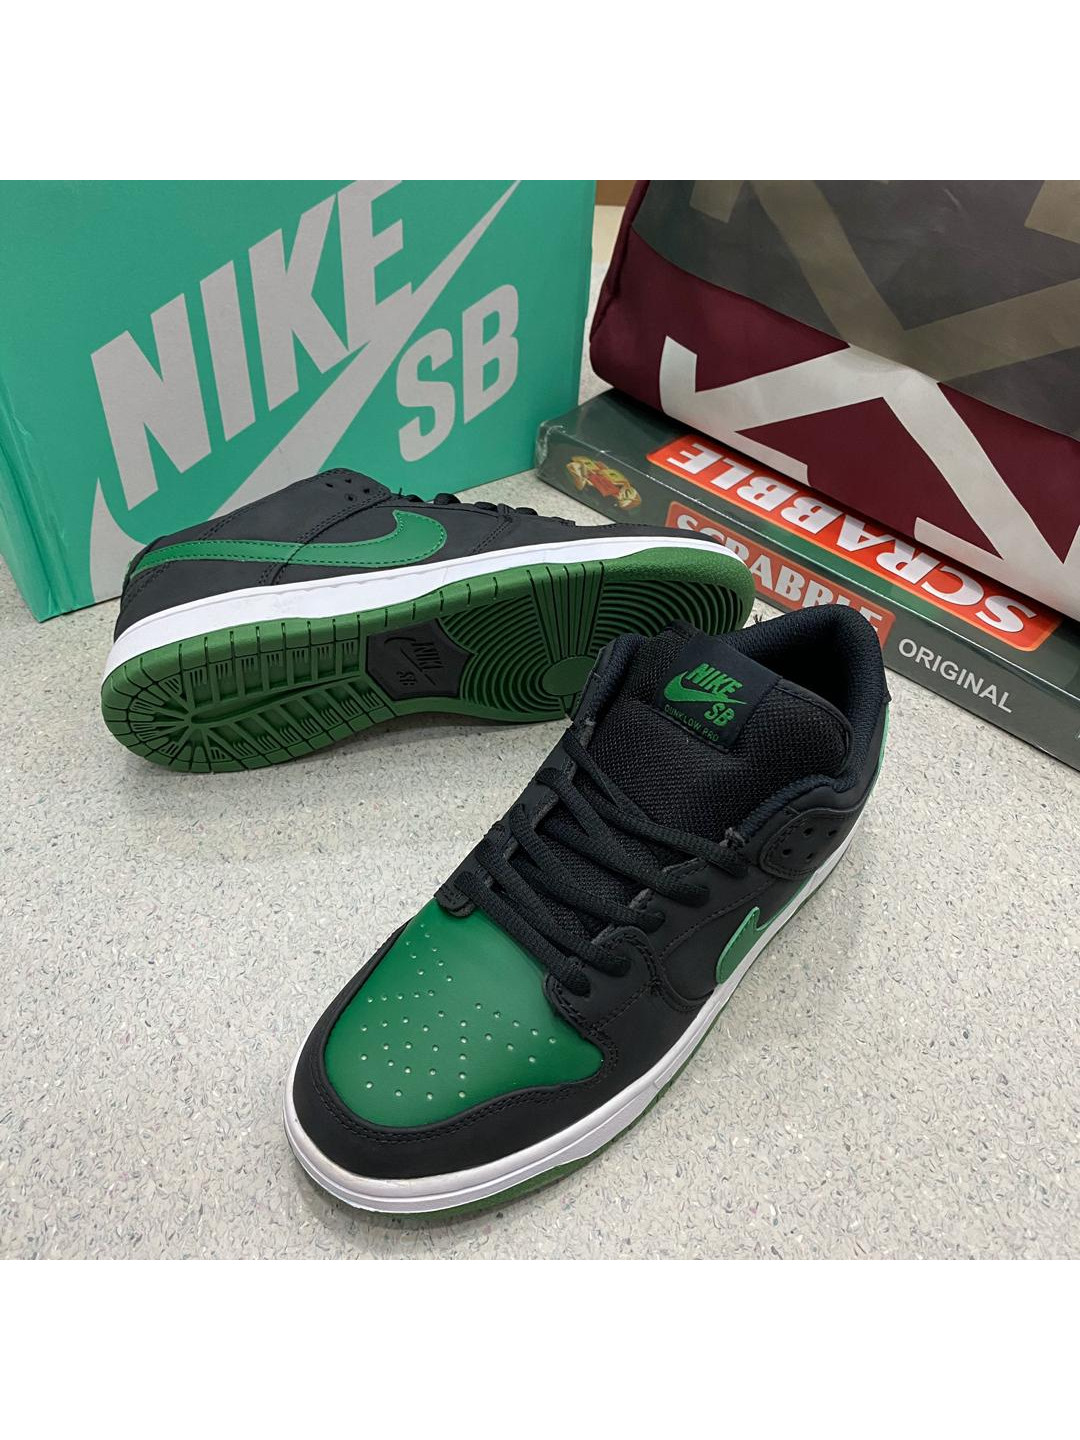 Buy New Nike J-Pack Jump Sneakers Lagos & Nigeria on Dexstitches